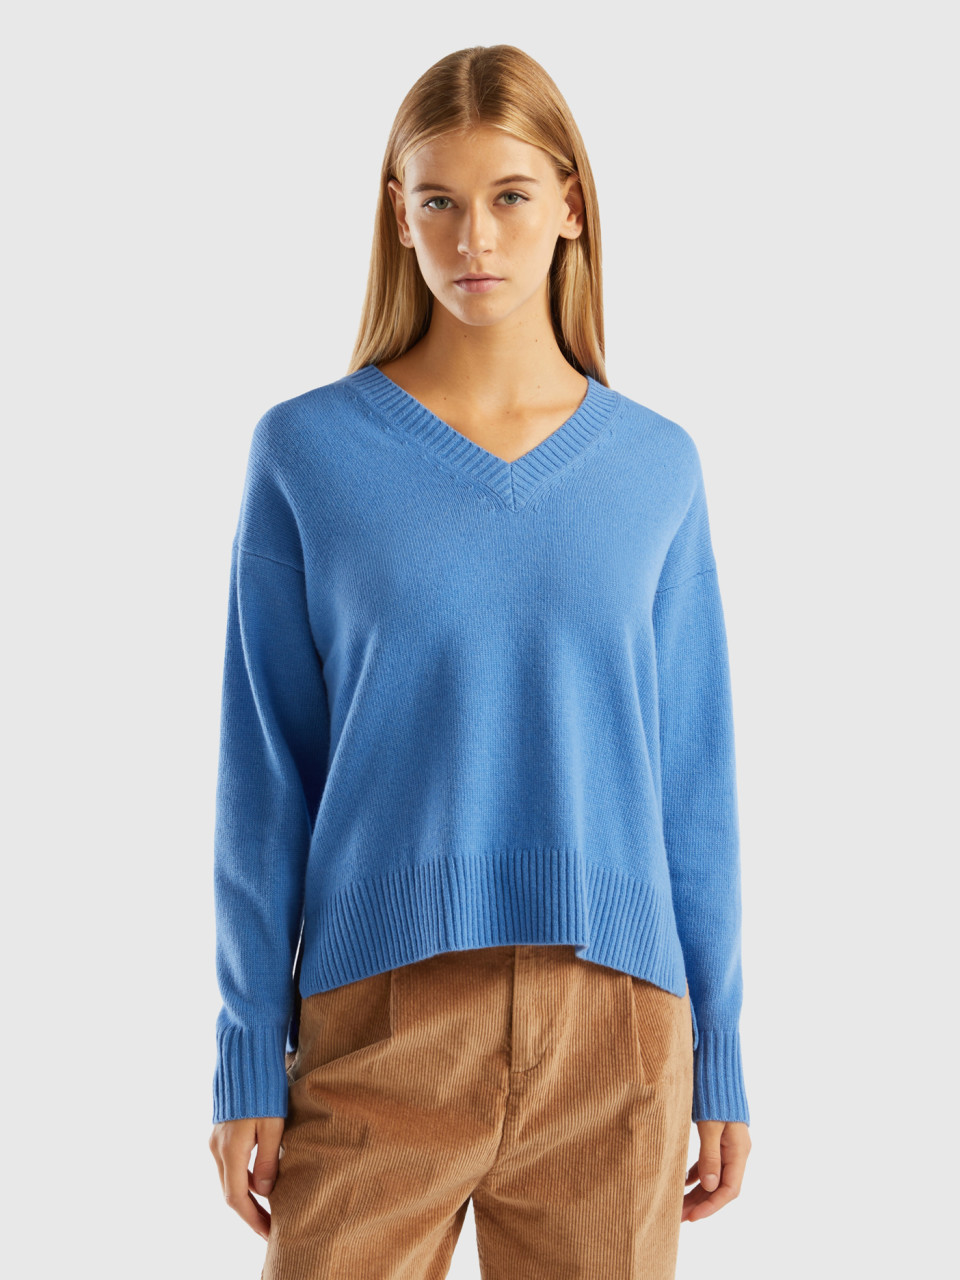 Benetton, Oversized Fit Sweater With Slits, Light Blue, Women